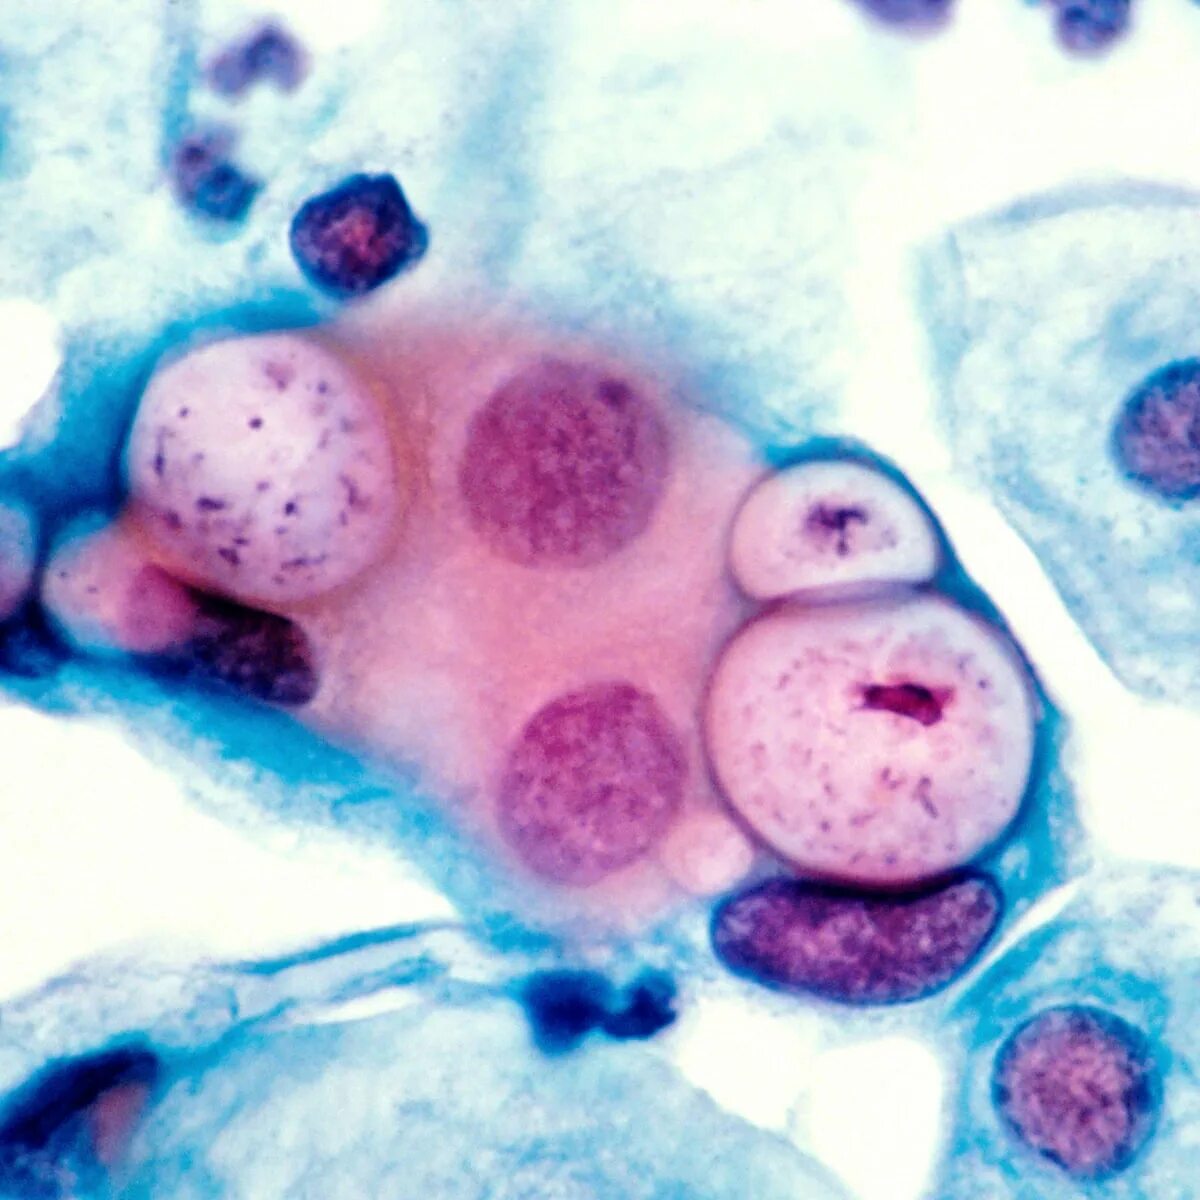 Anti chlamydia trachomatis. Хламидиями трахоматис.